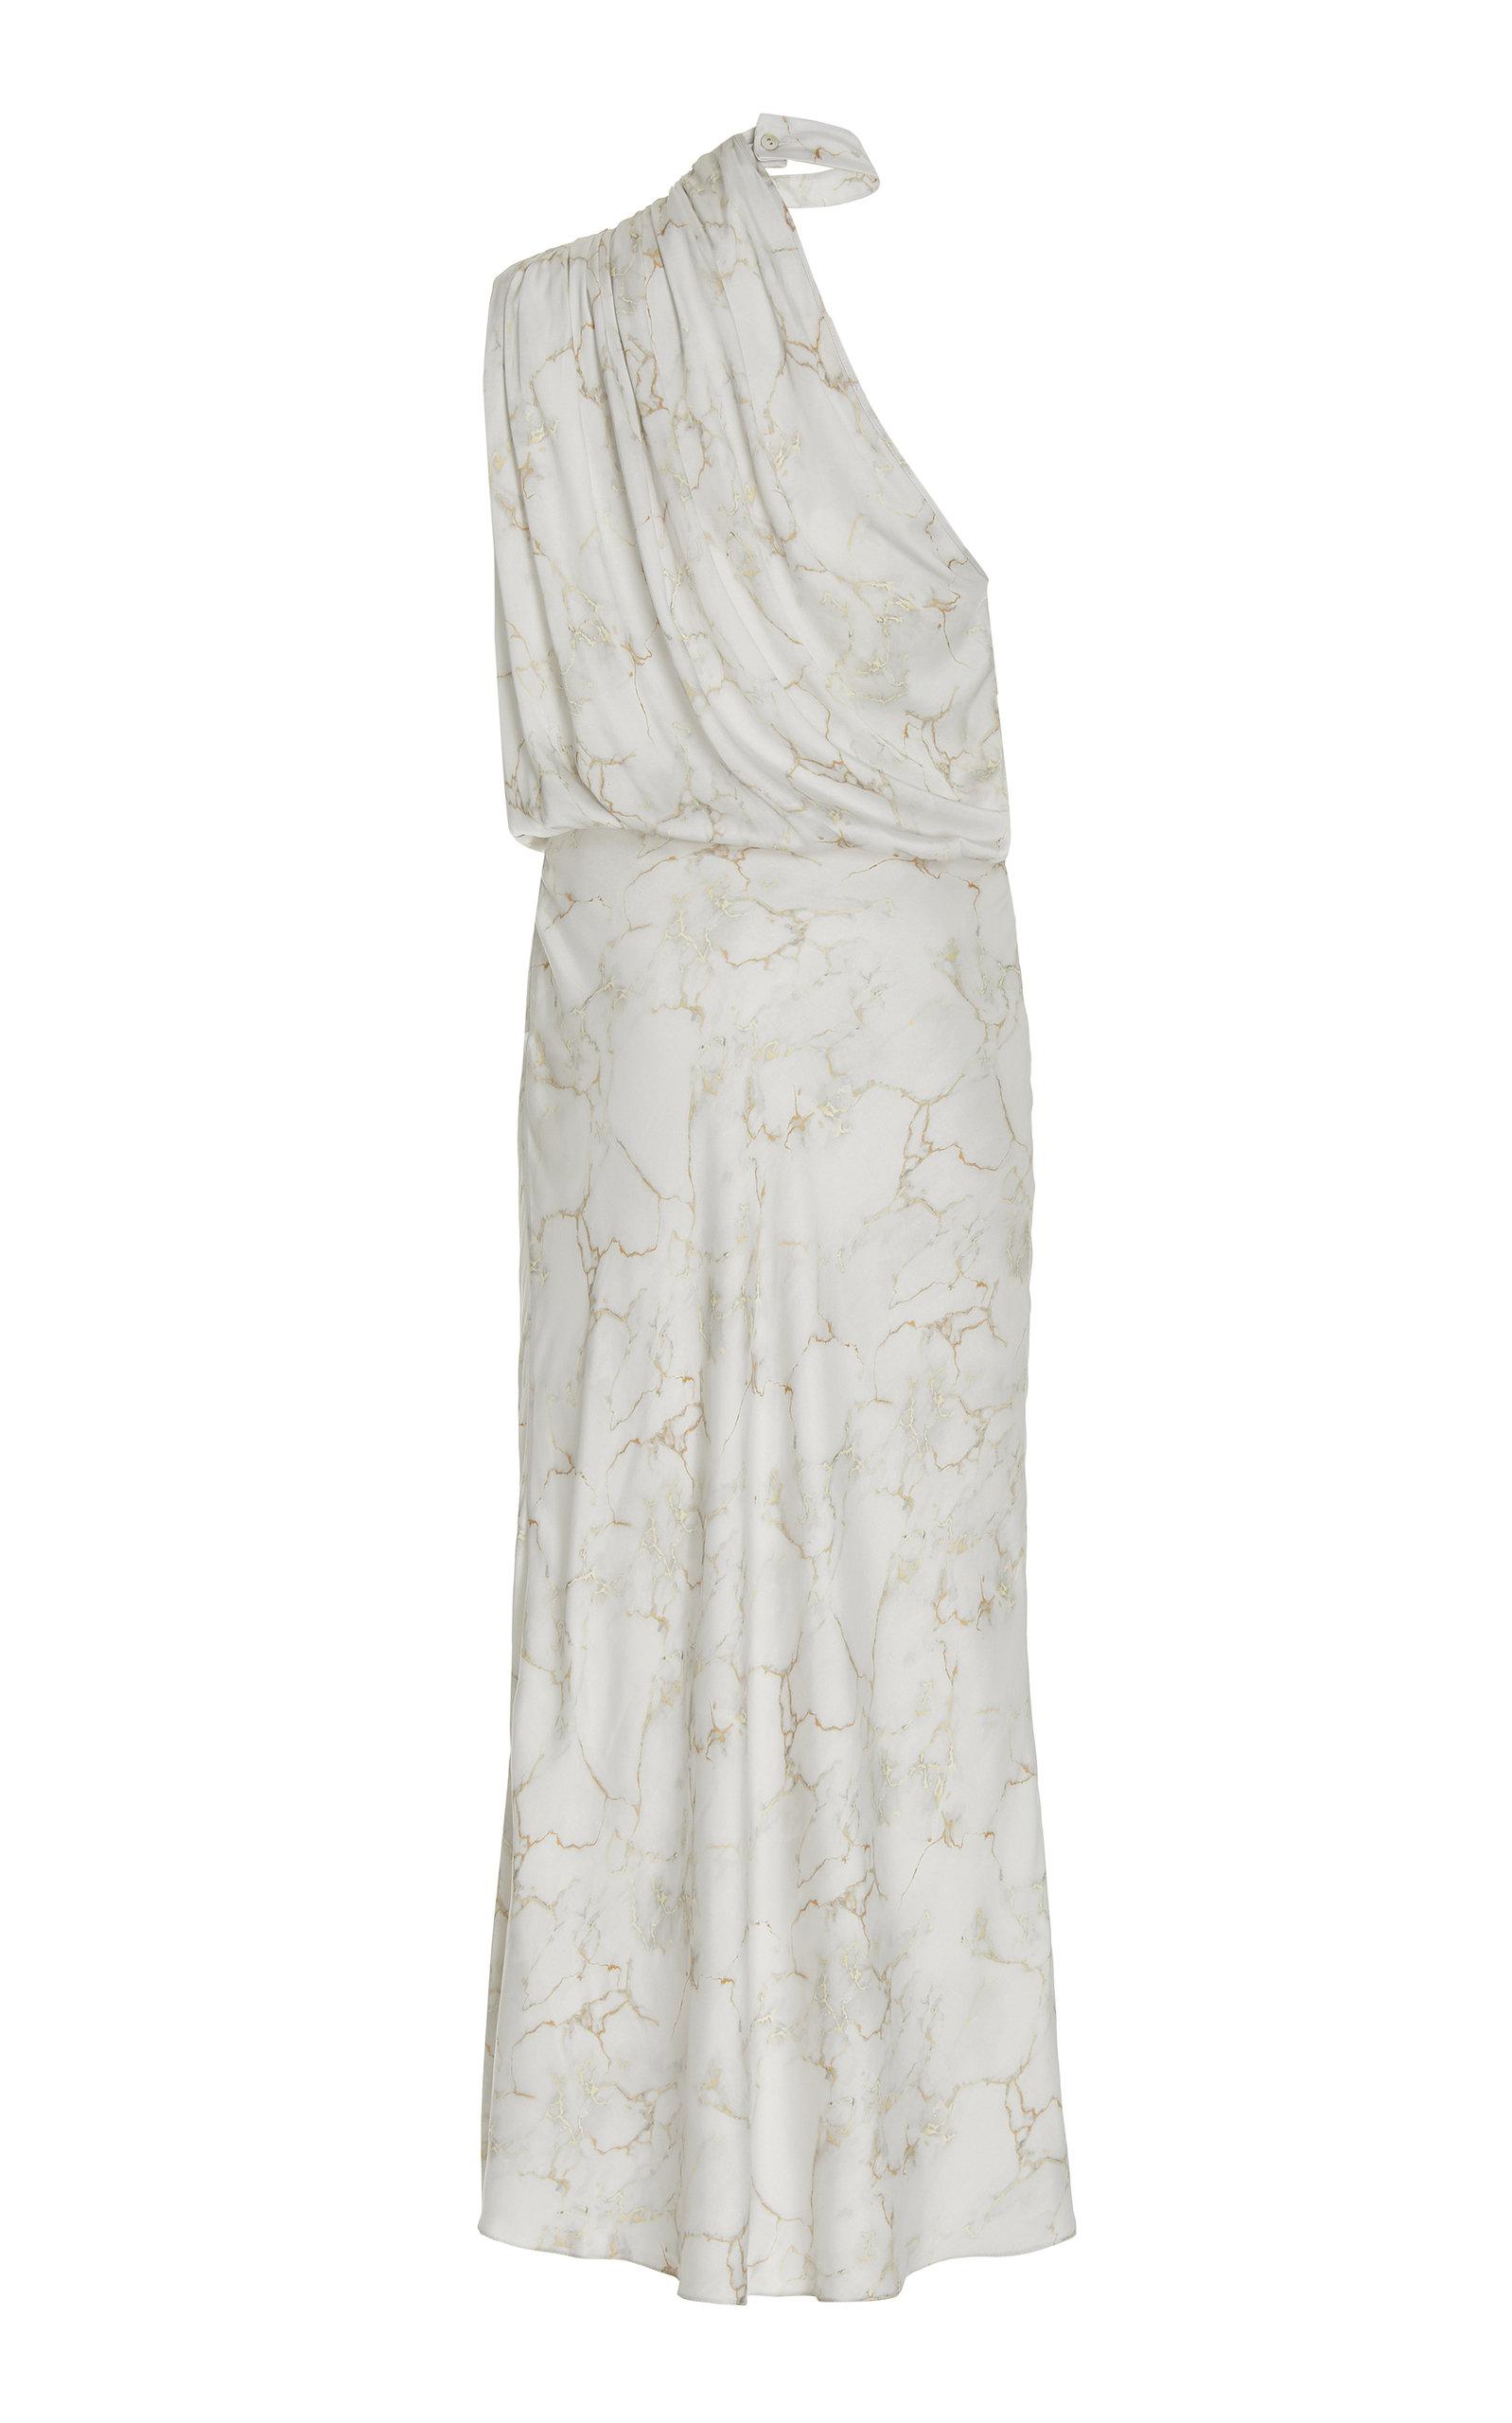 White marble dress